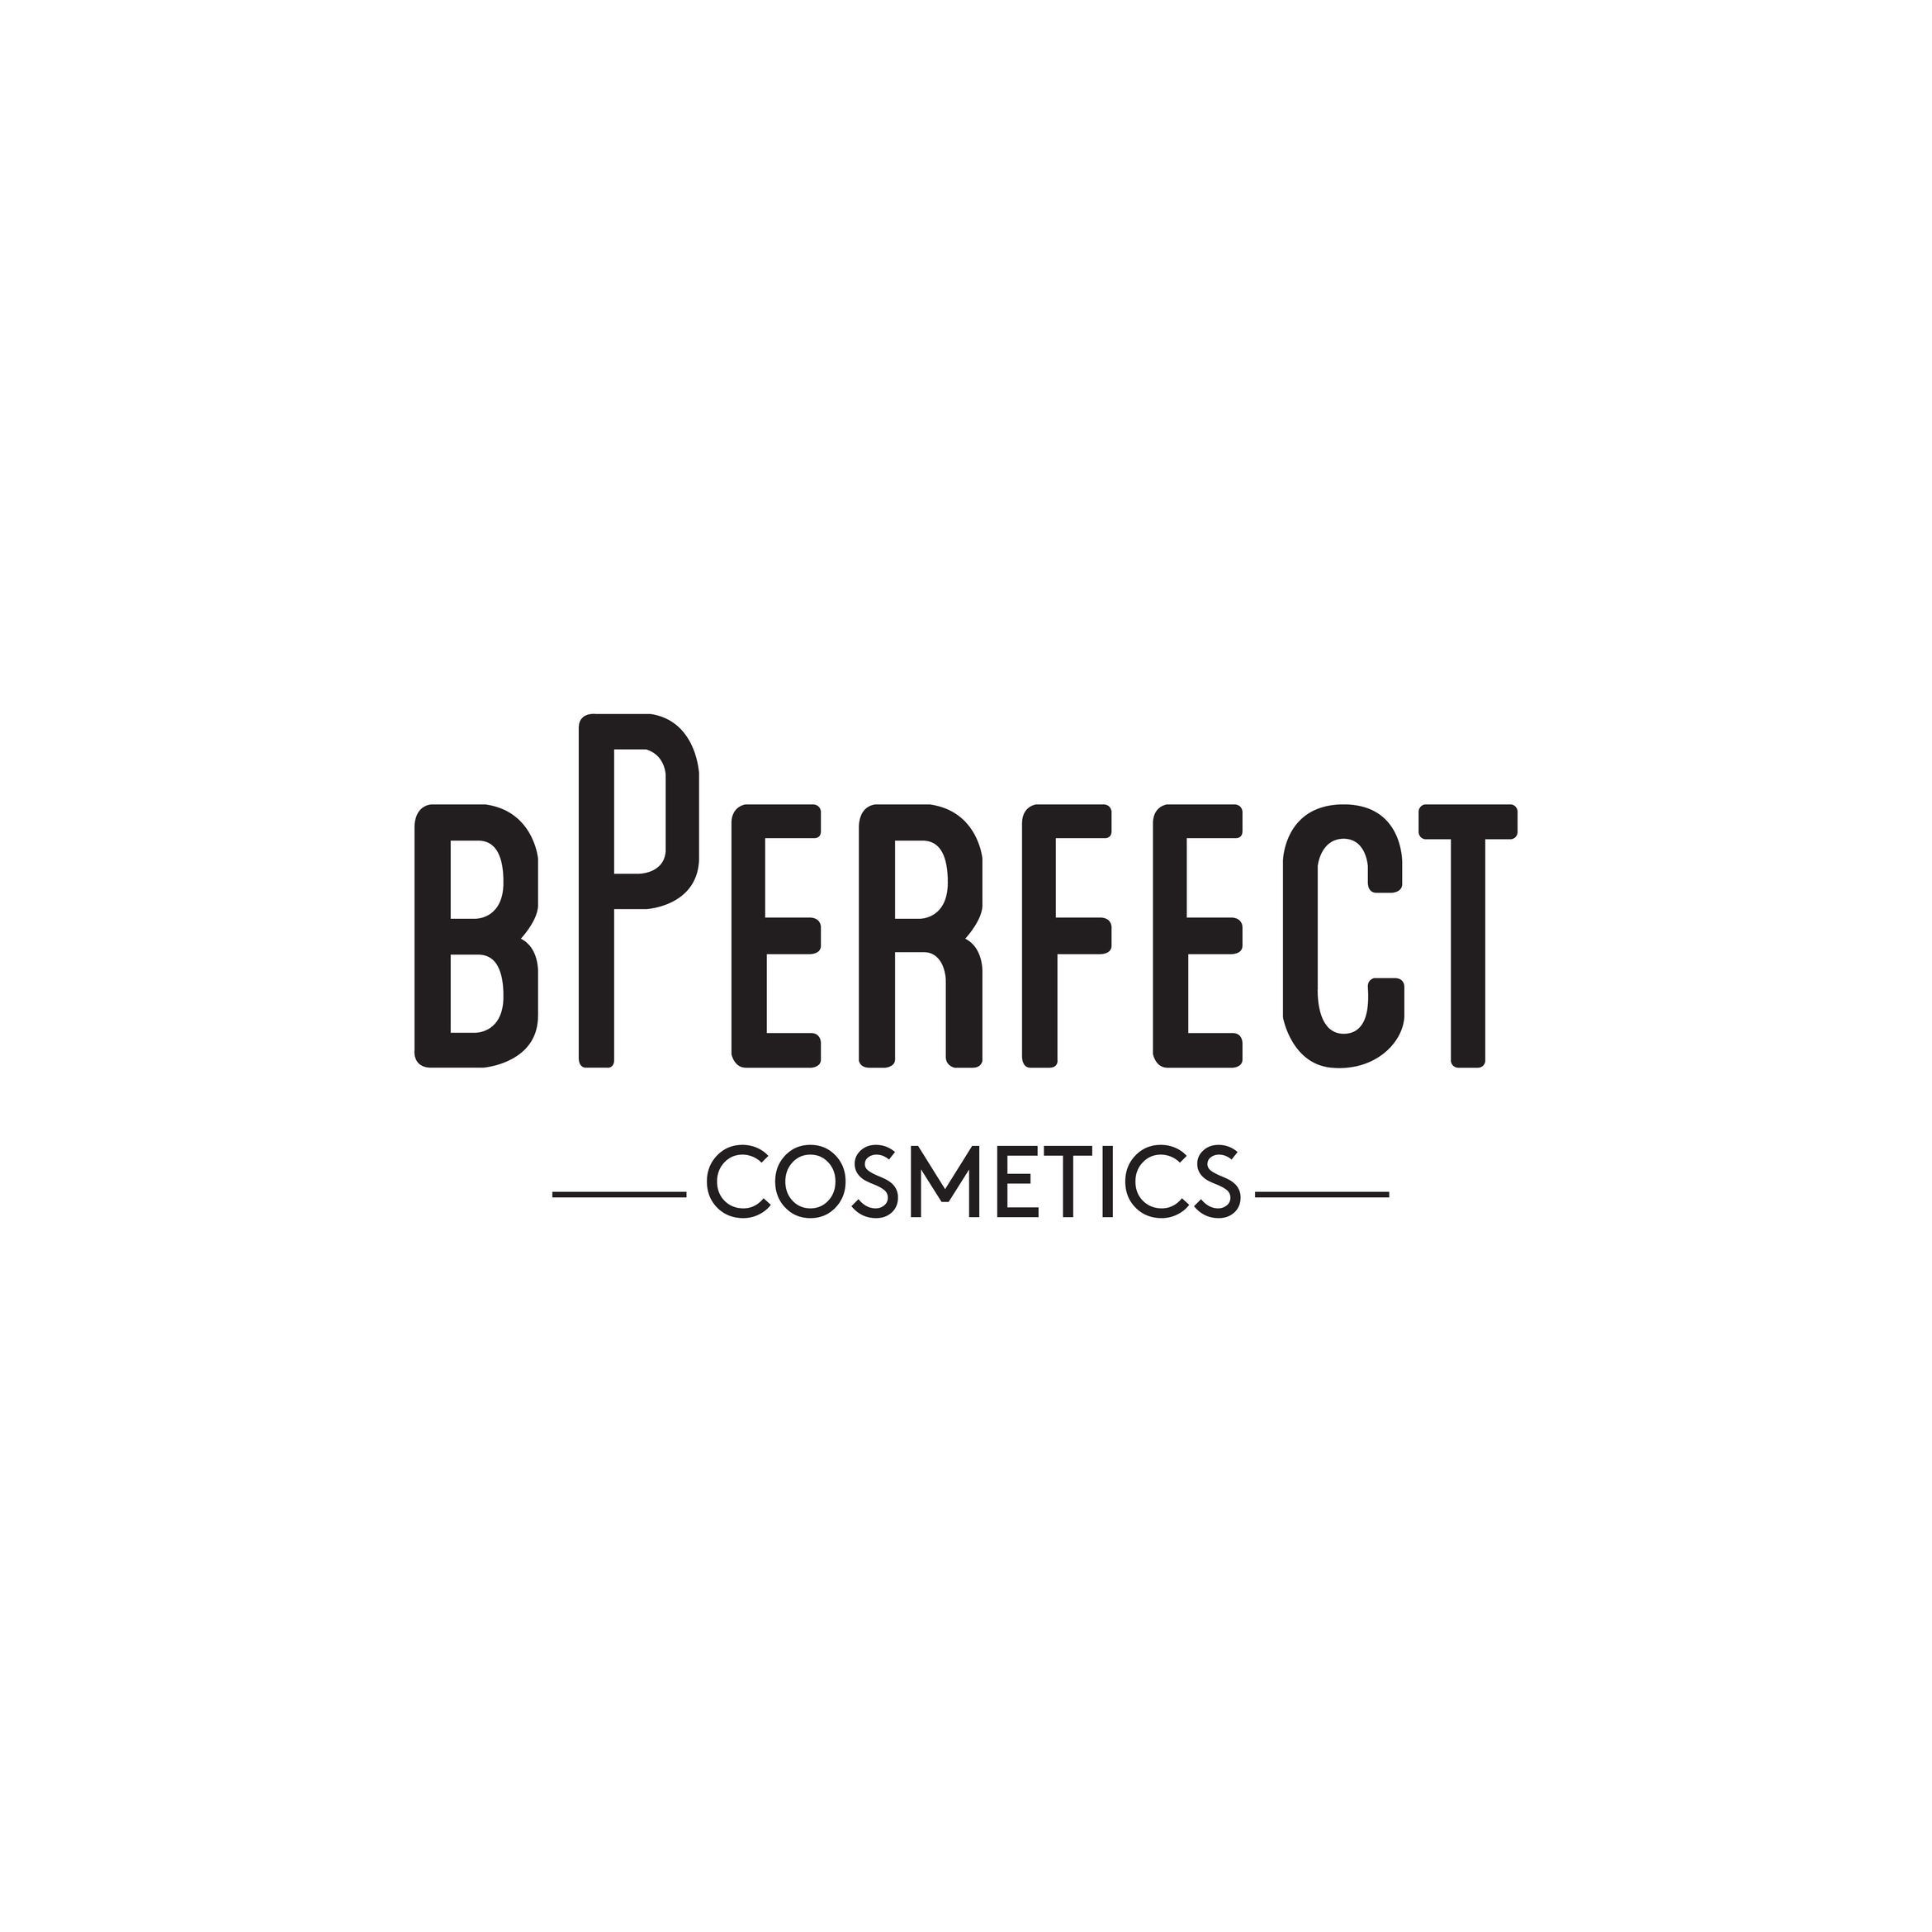 BPerfect Cosmetics Newry, Buttercrane Quay, BT35 8HJ, Newry